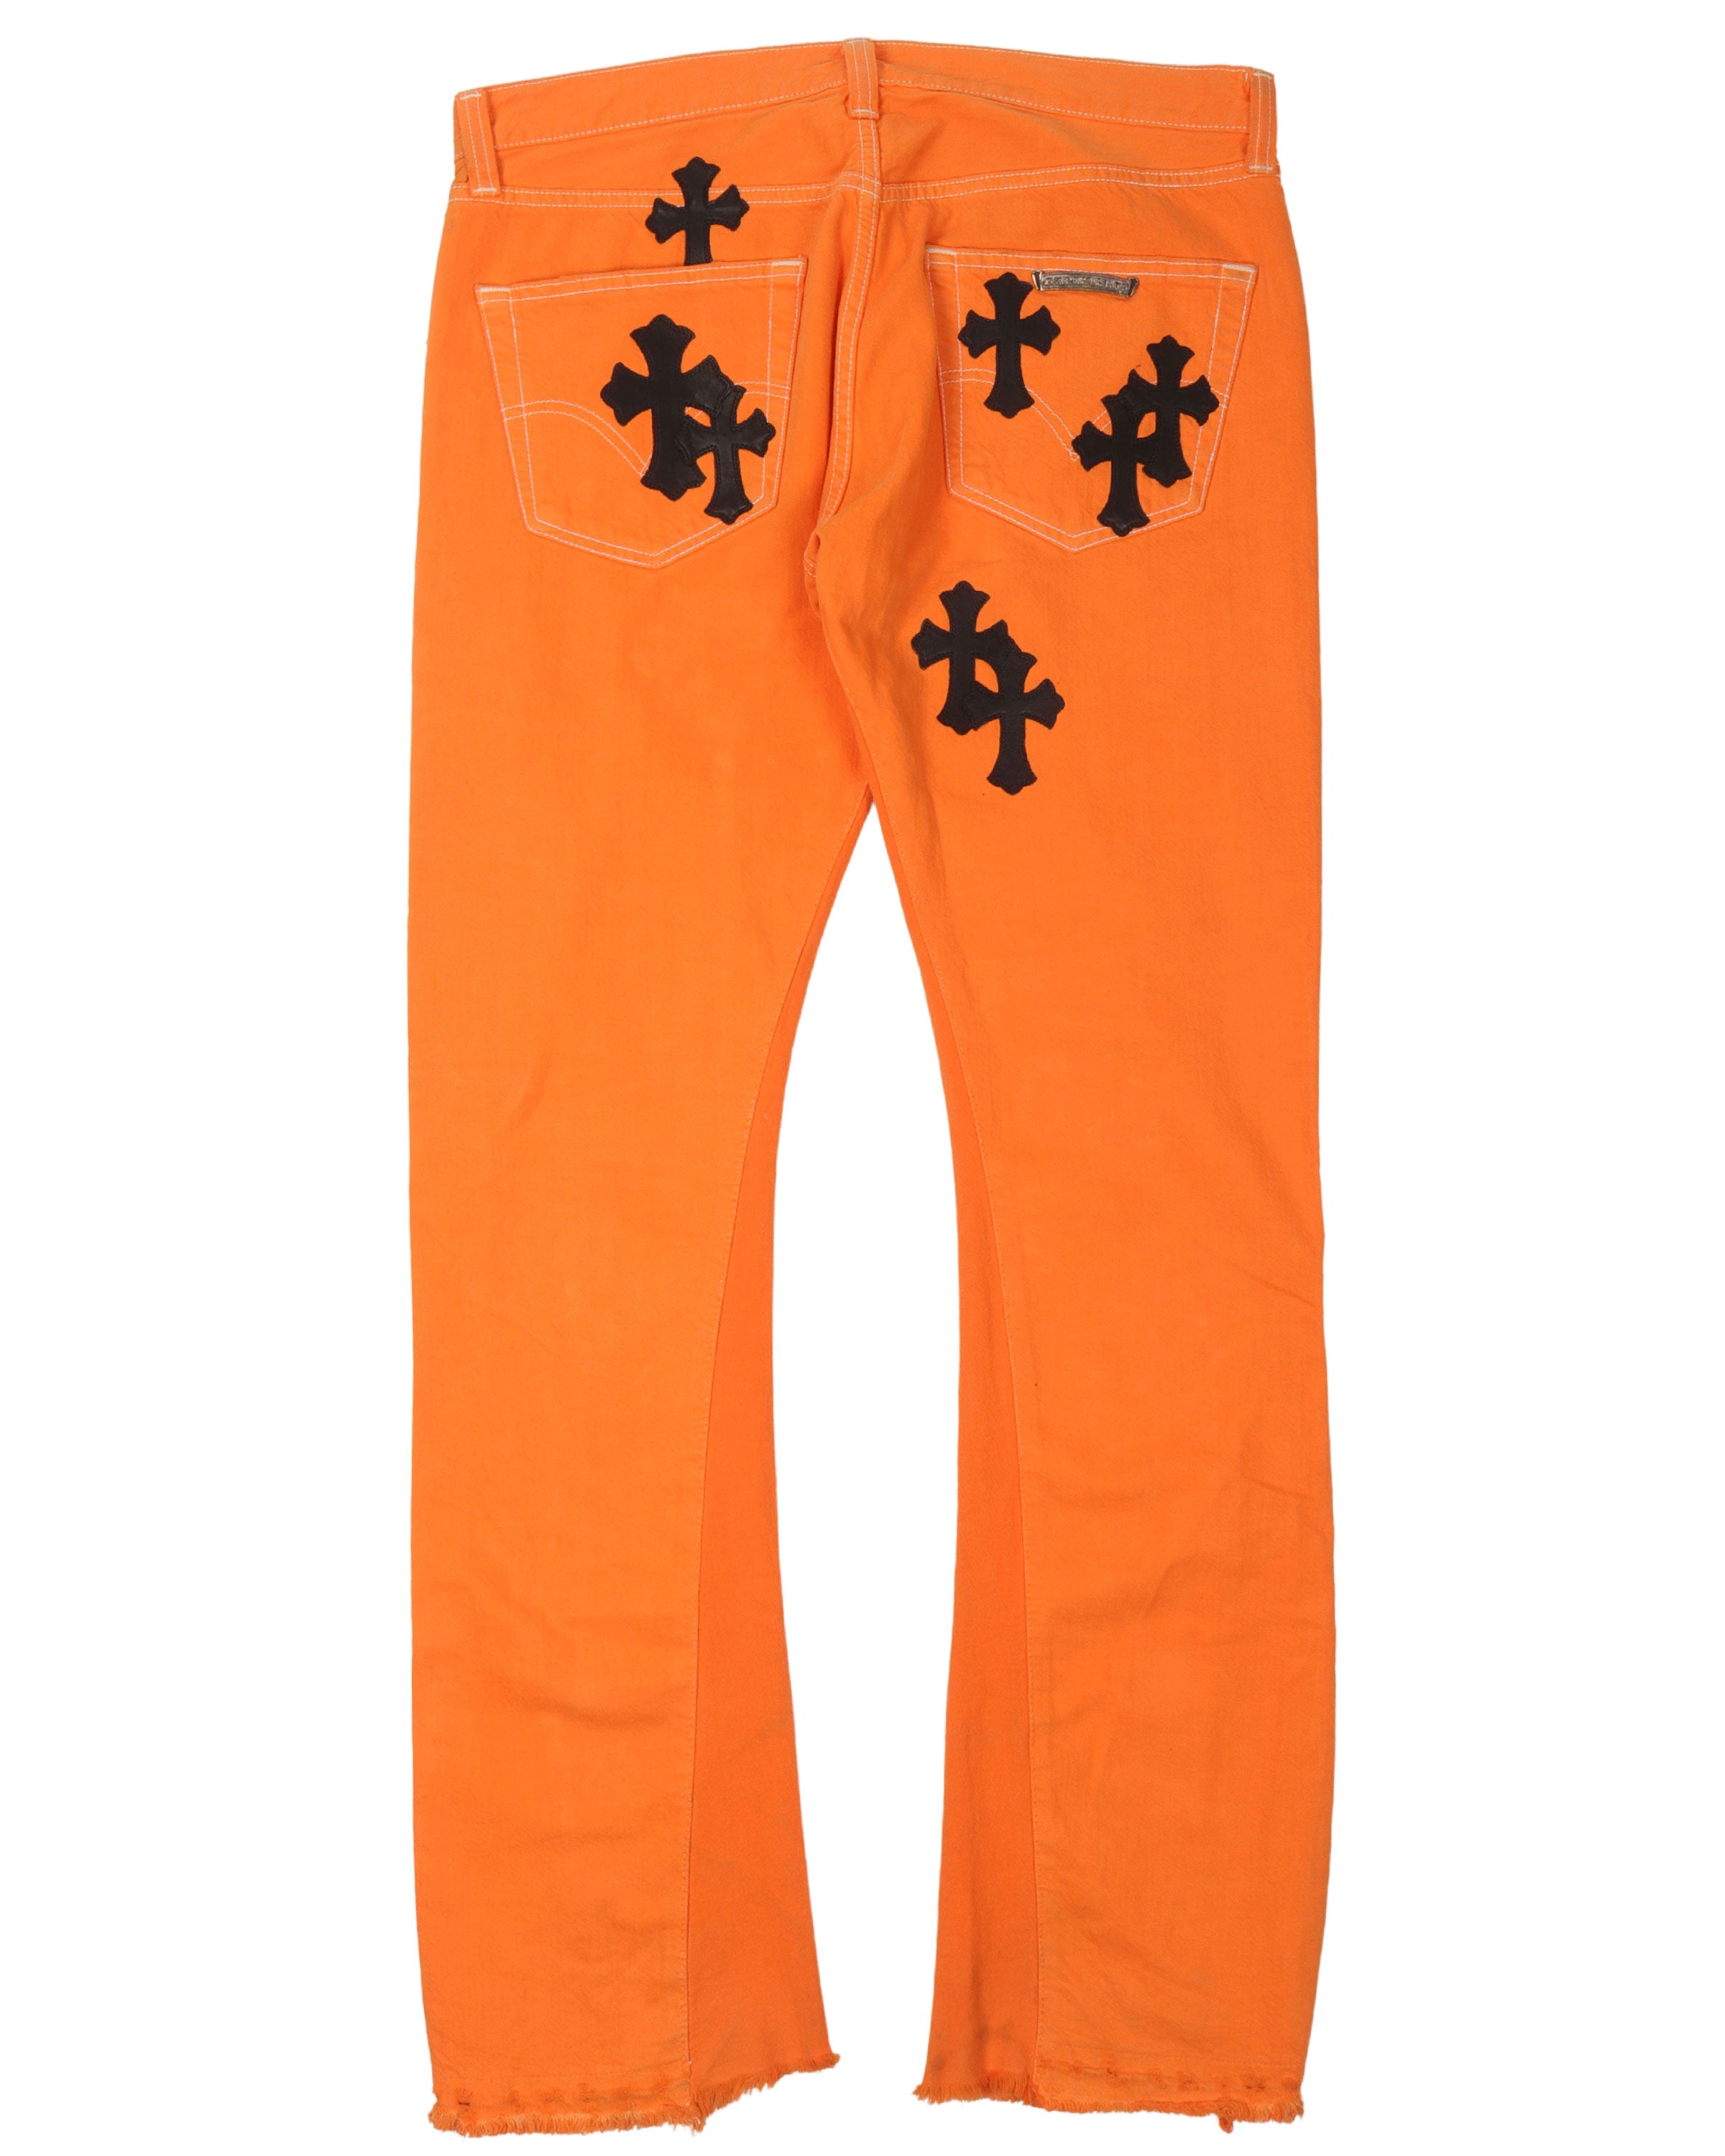 Chrome Hearts GALLERY DEPT Denim Pants crosspatch orange 32